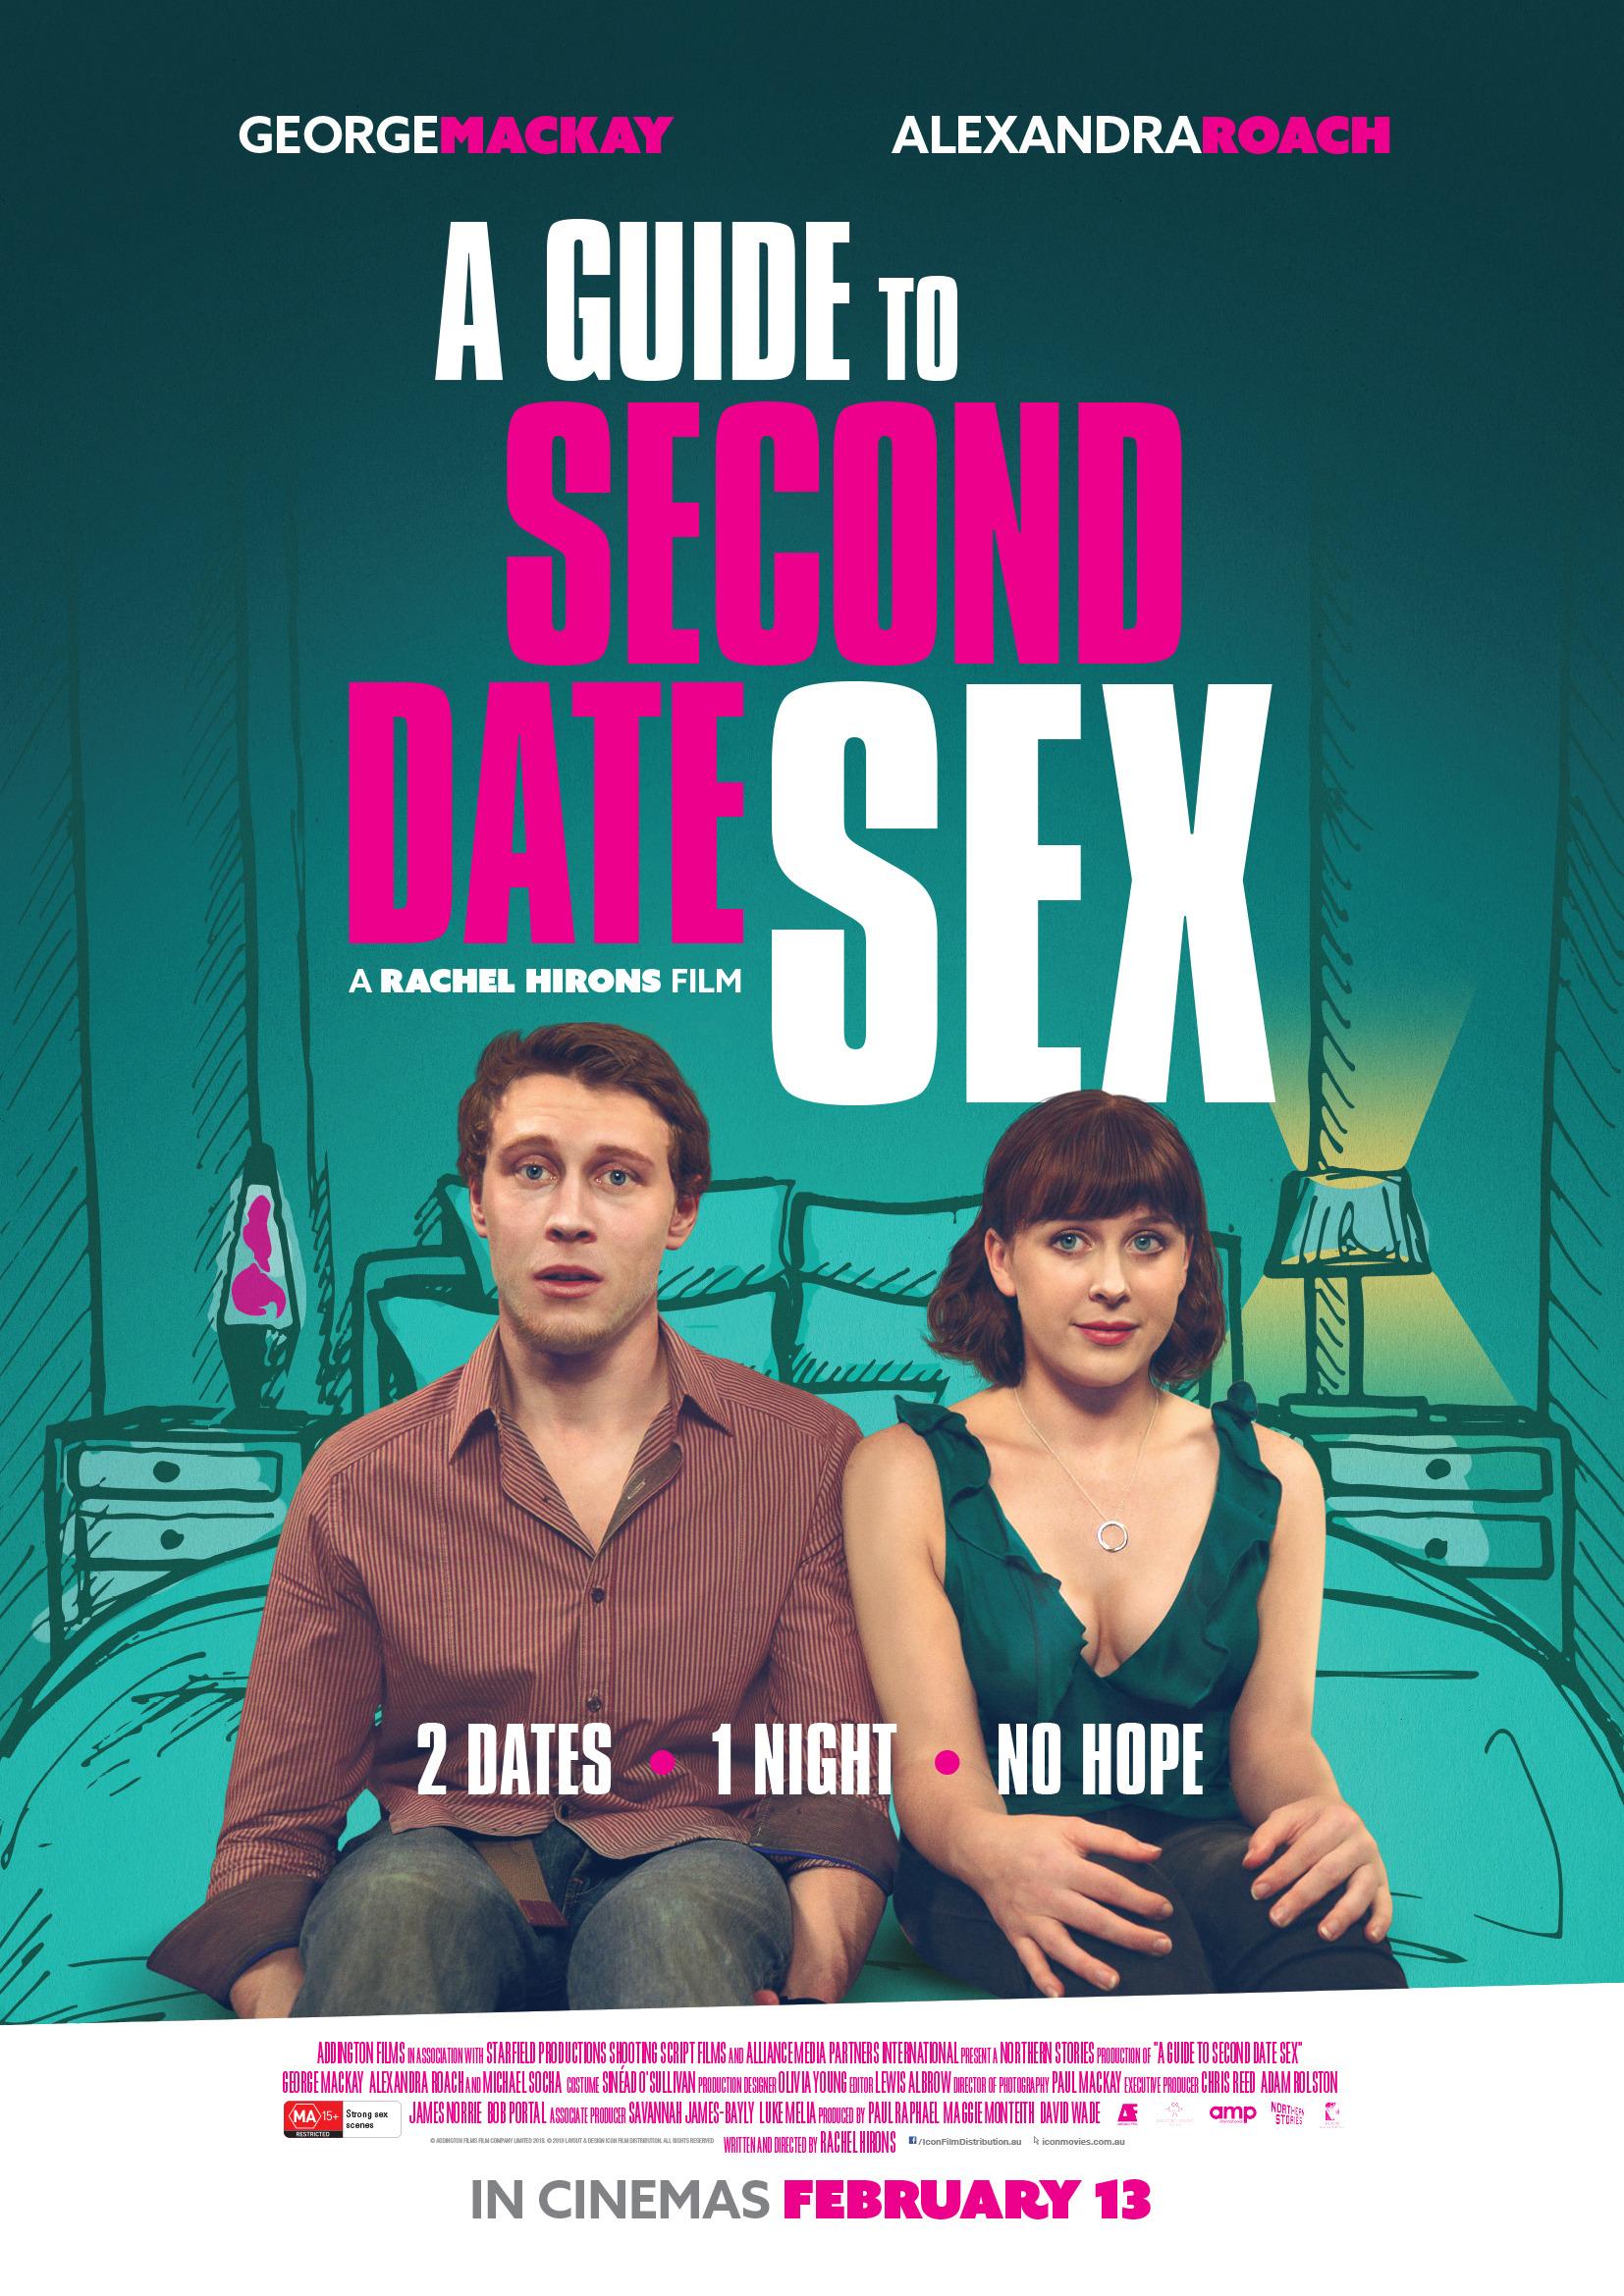 Постер фильма Руководство по сексу на втором свидании | A Guide to Second Date Sex